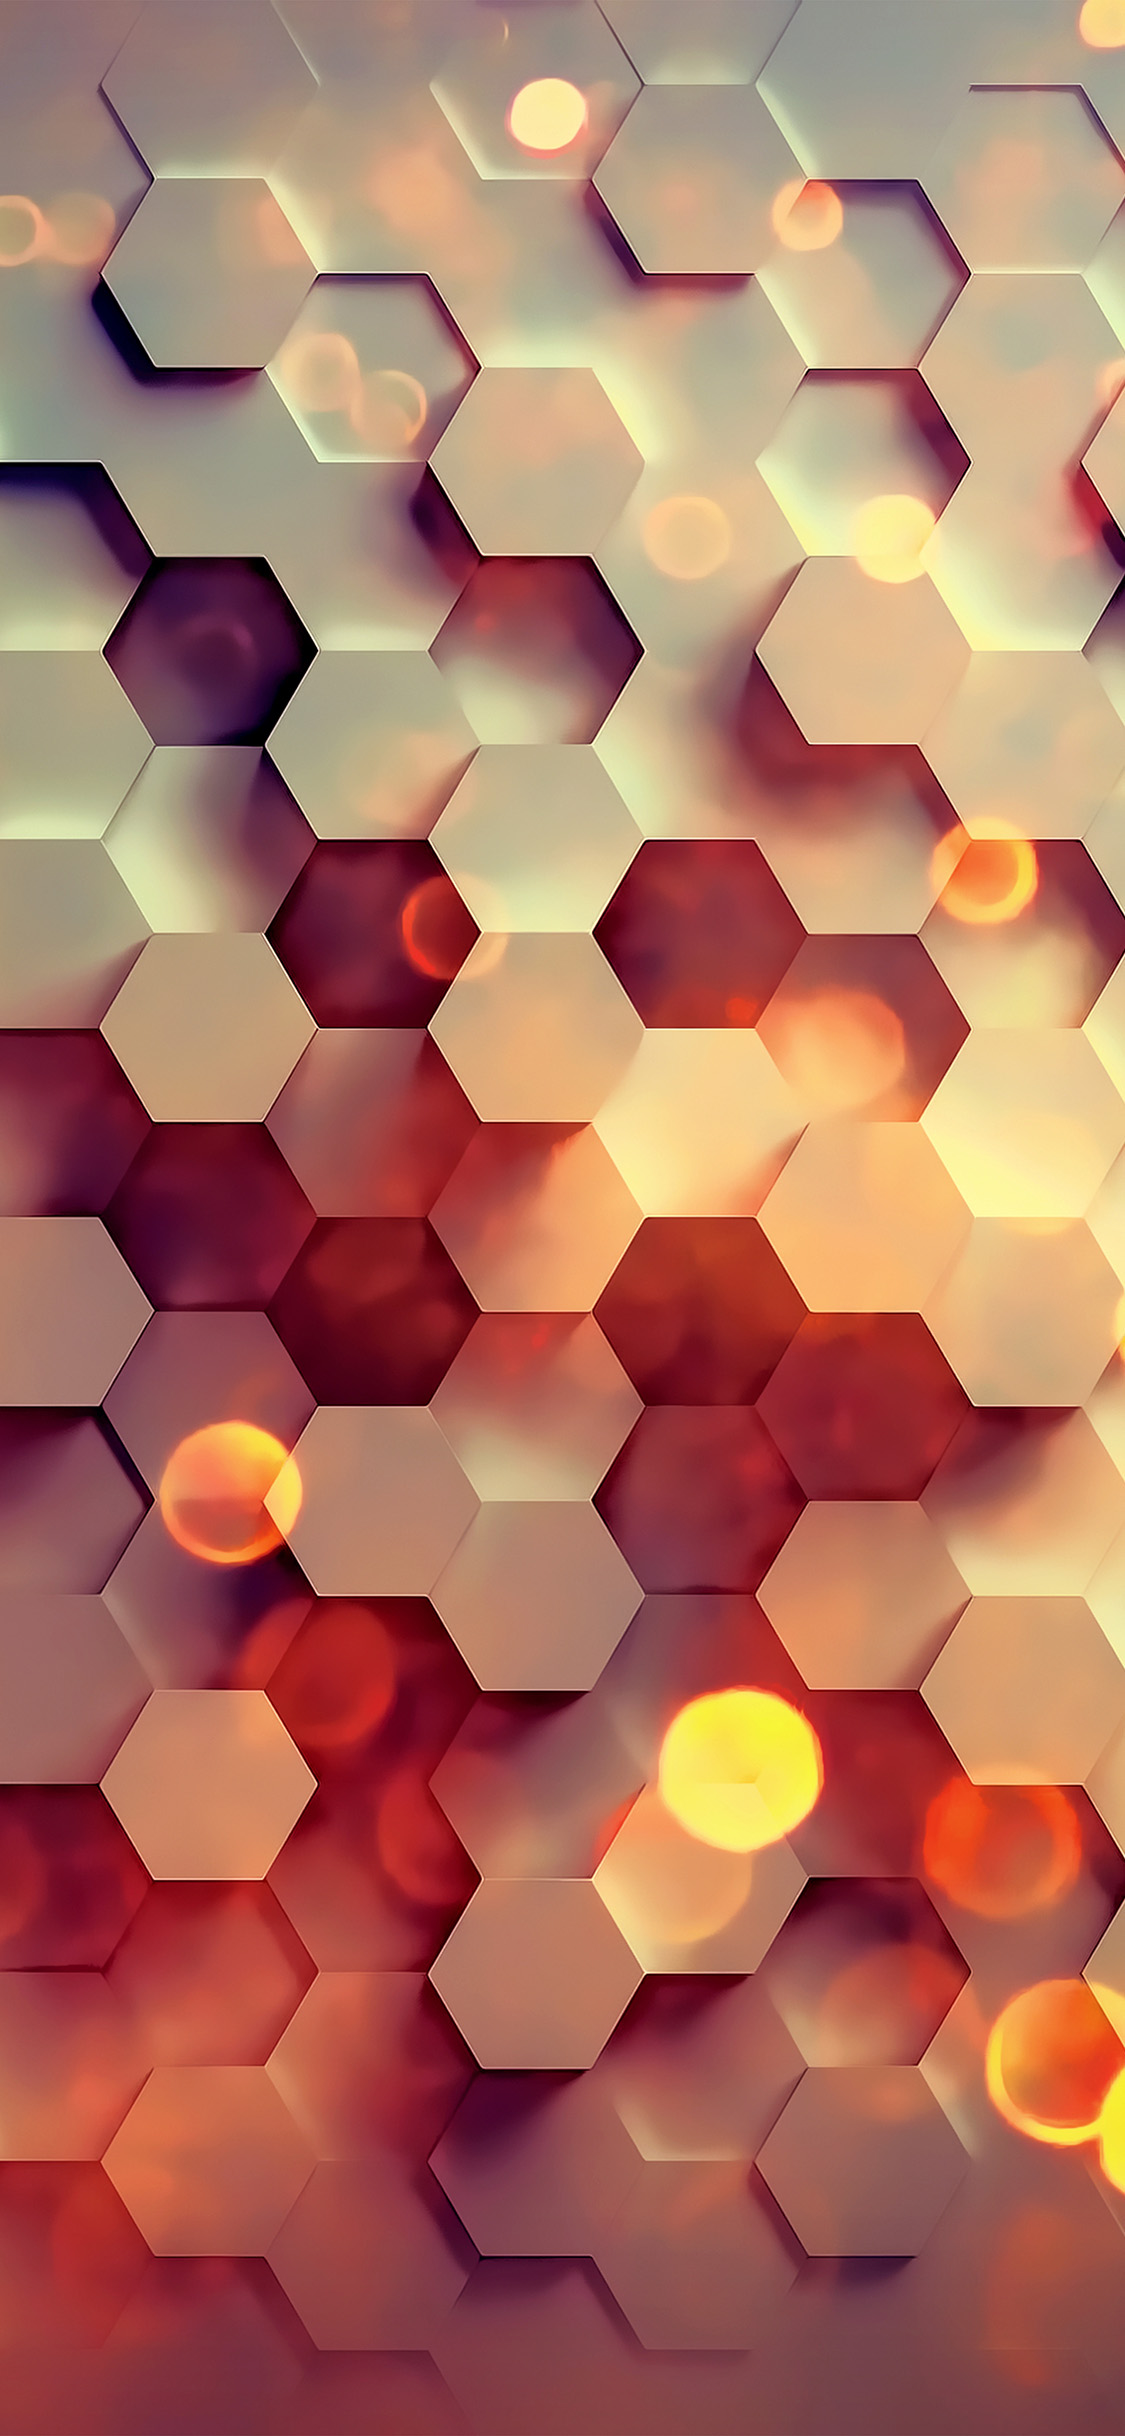 Honey hexagon digital abstract iPhone wallpaper 